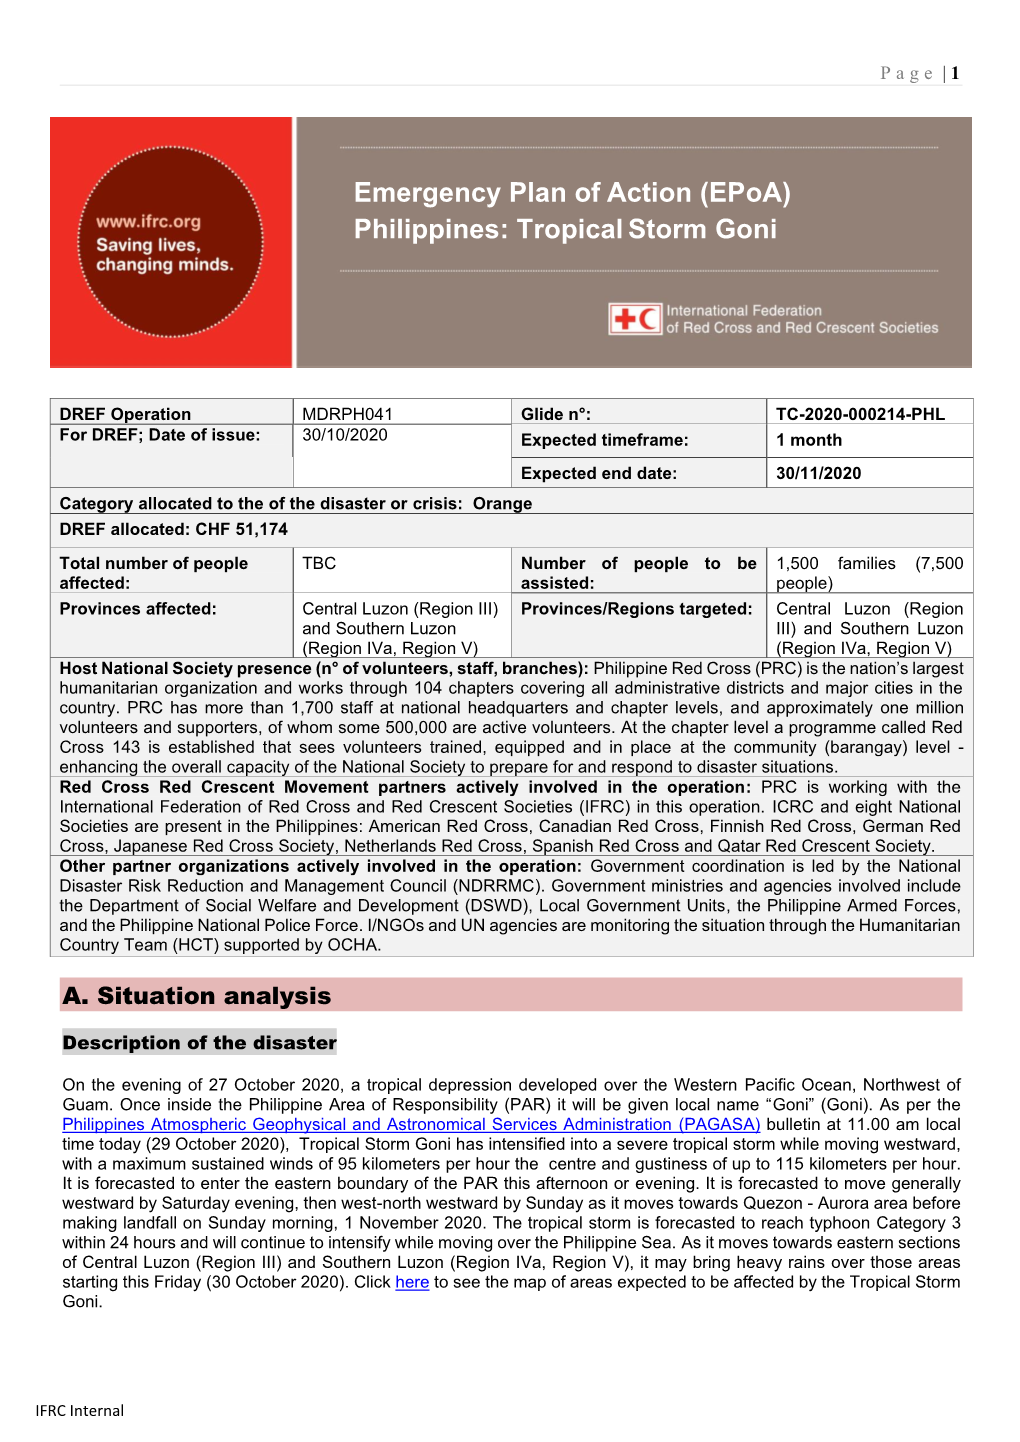 Emergency Plan of Action (Epoa) Philippines: Tropicalstorm Goni